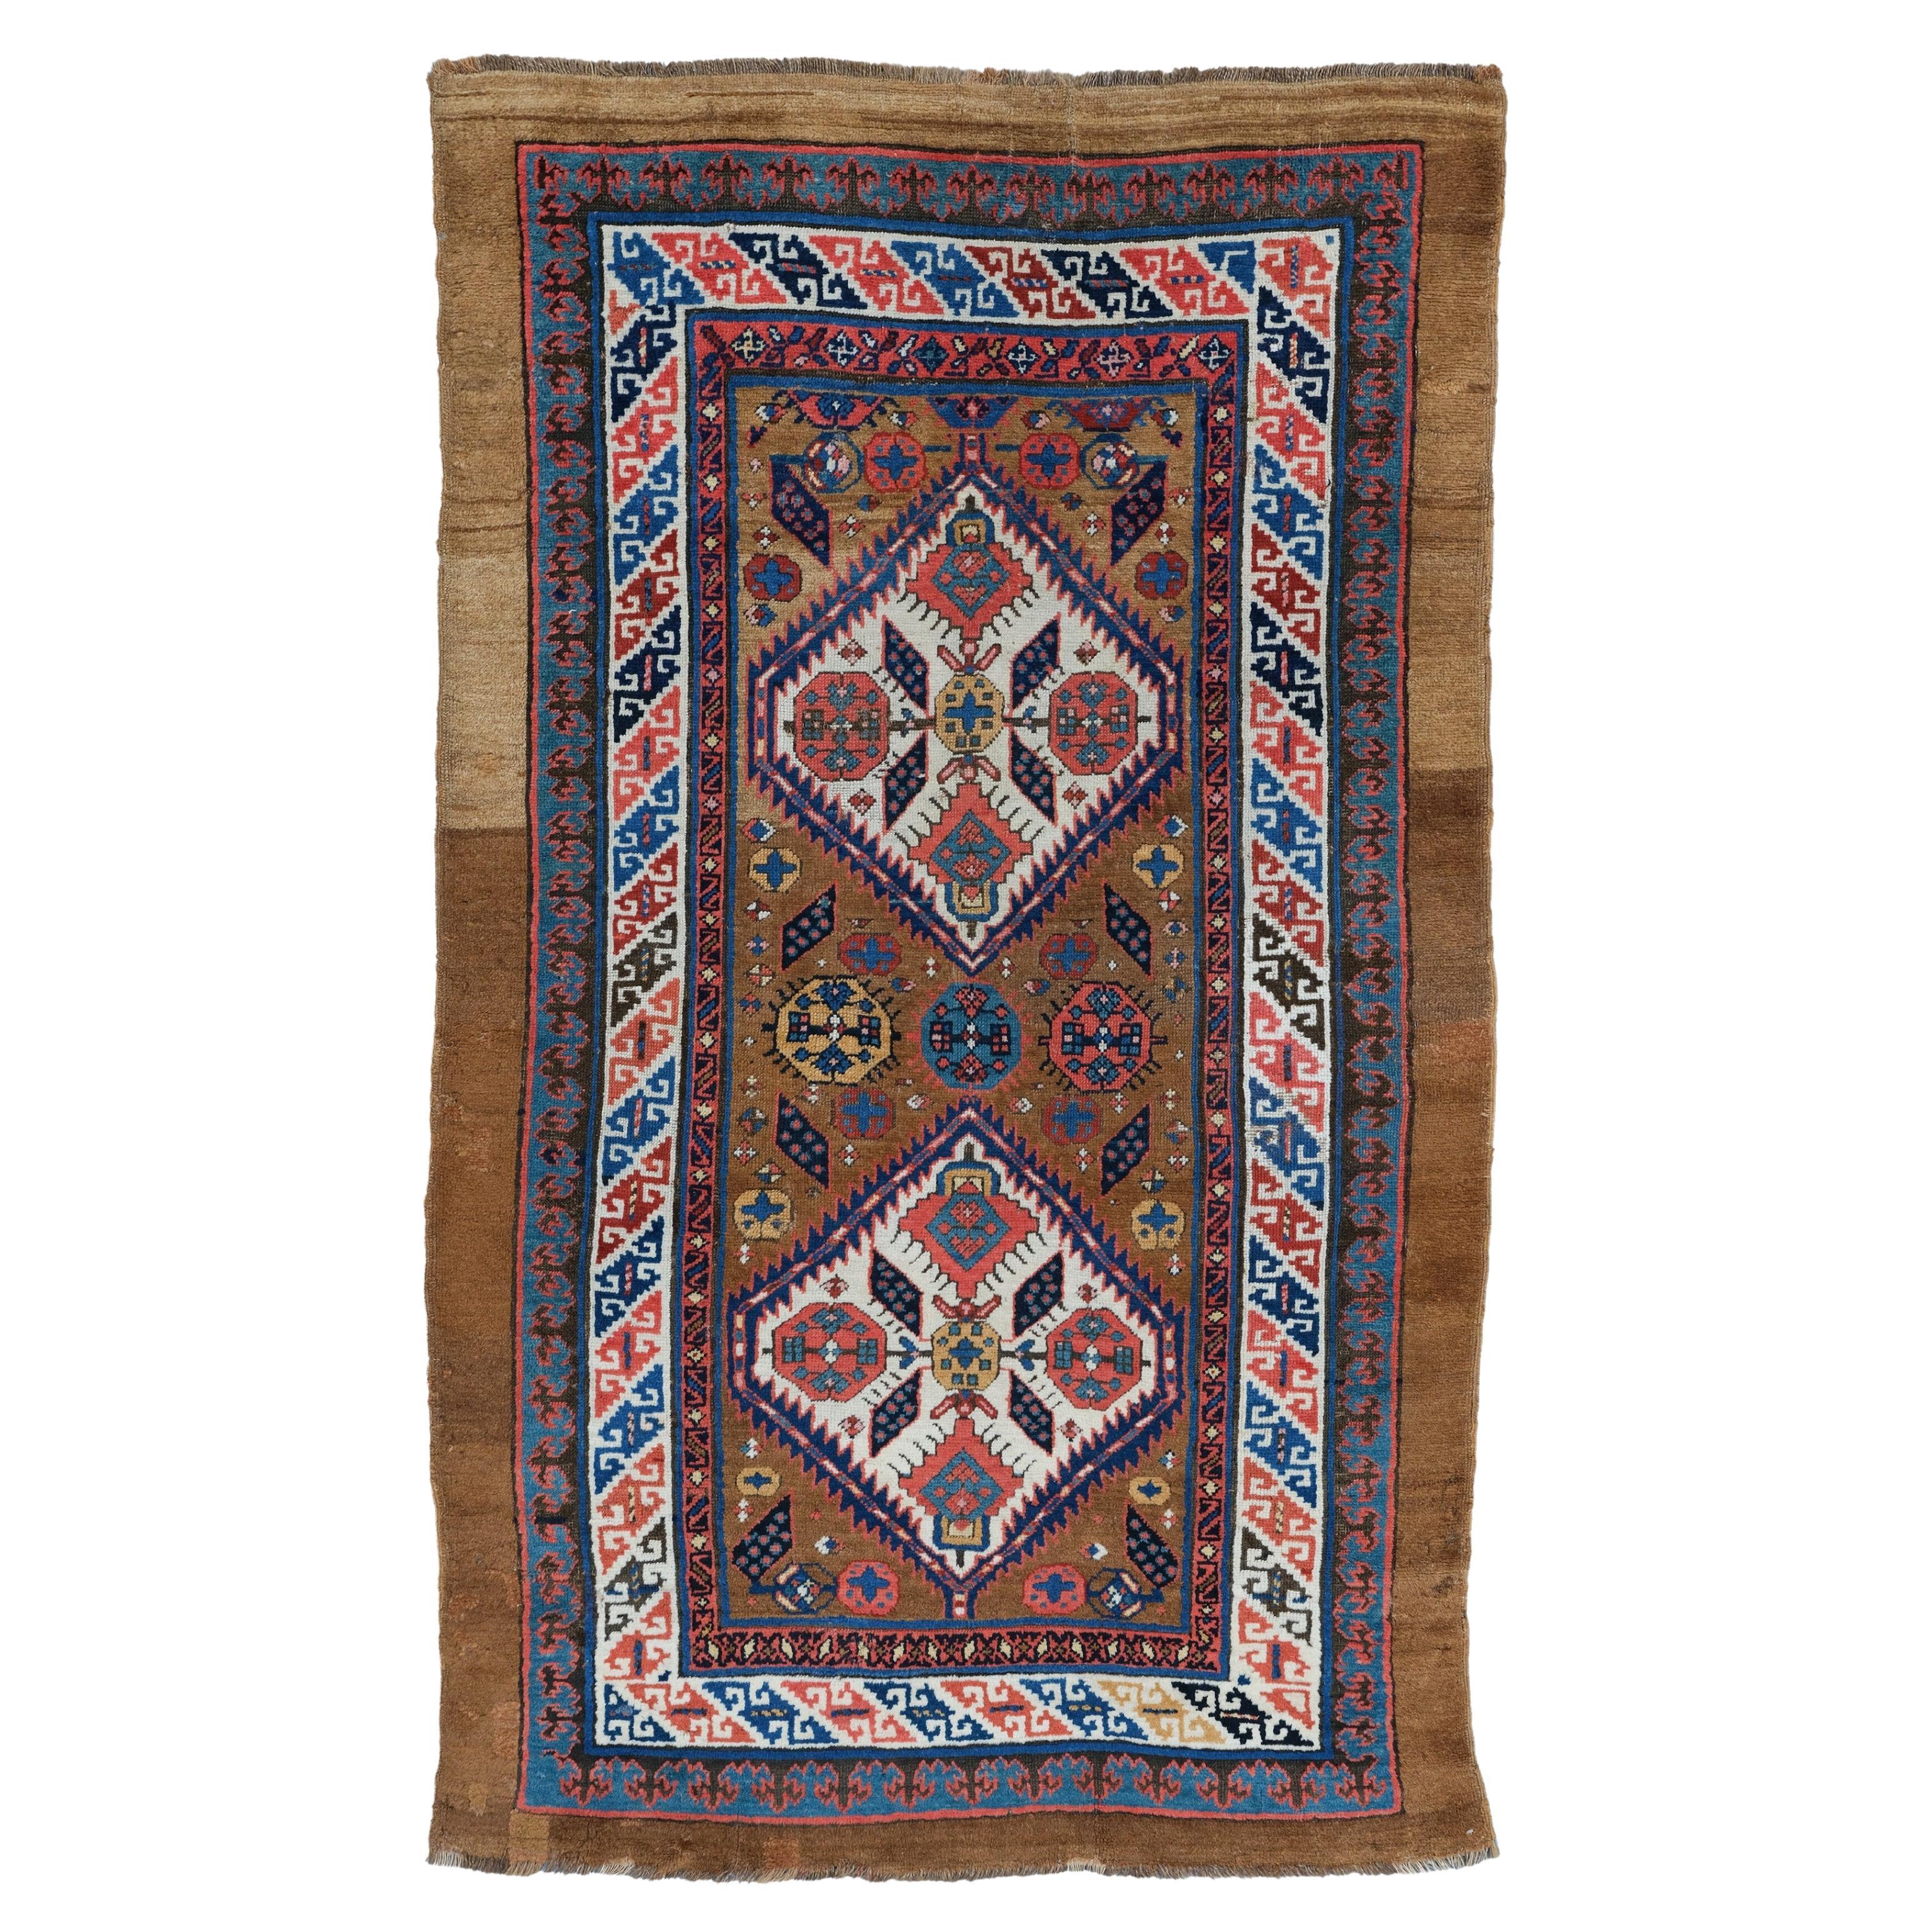 Tapis Sarab du 19ème siècle, tapis ancien tissé à la main, tapis ancien